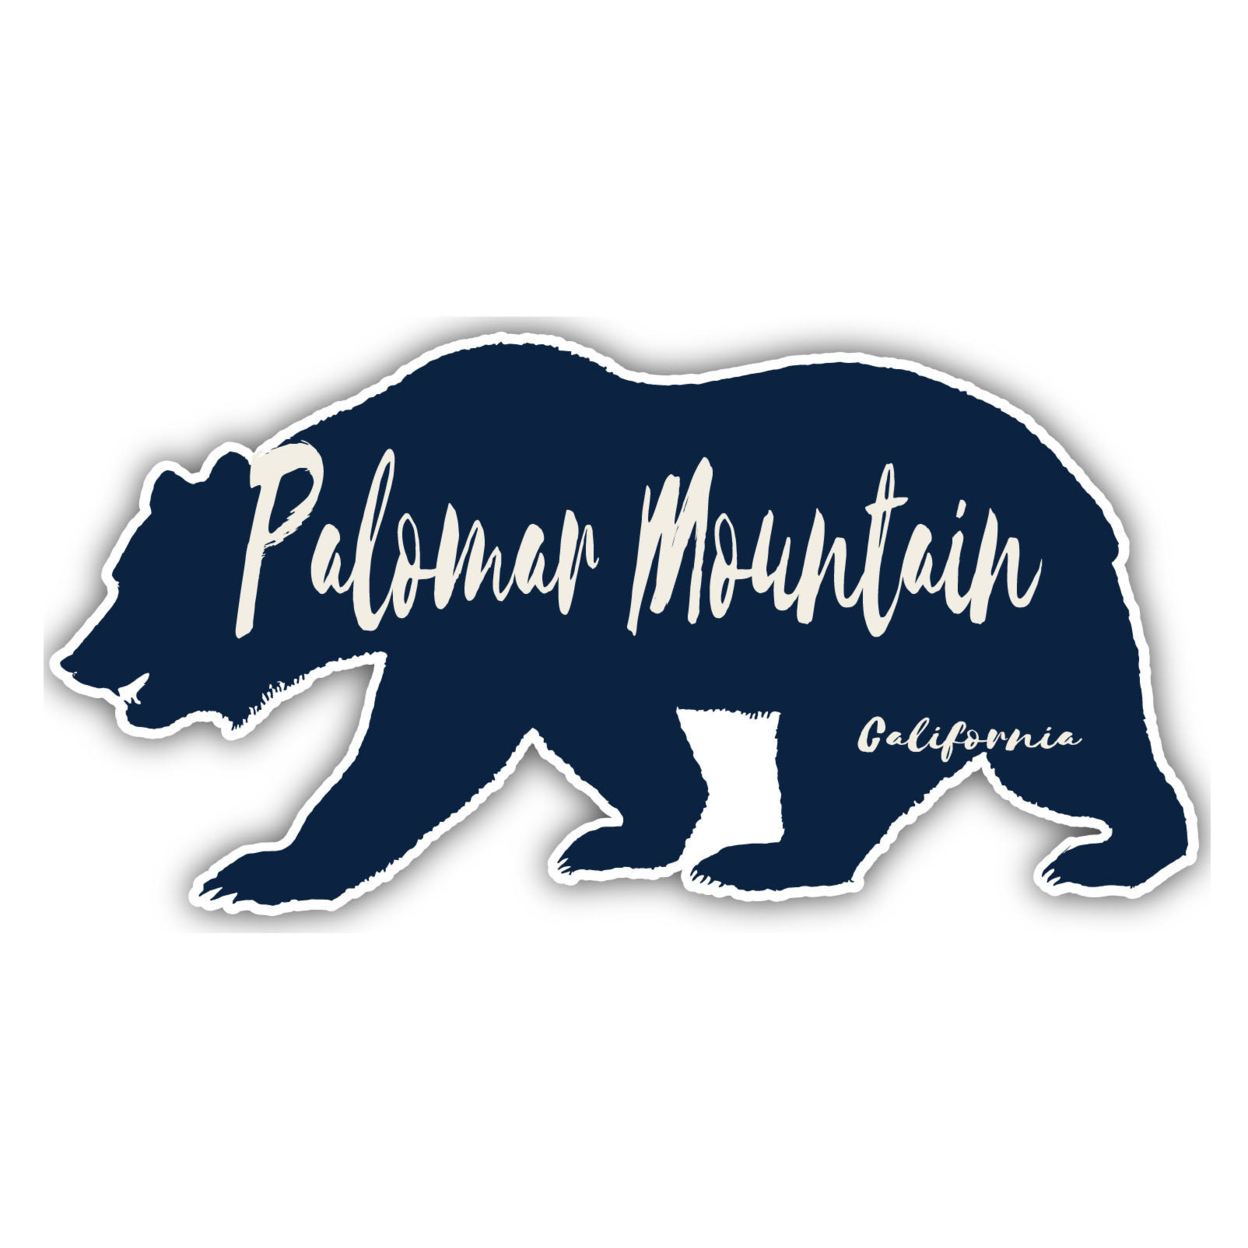 Palomar Mountain California Souvenir Decorative Stickers (Choose Theme And Size) - Single Unit, 4-Inch, Bear